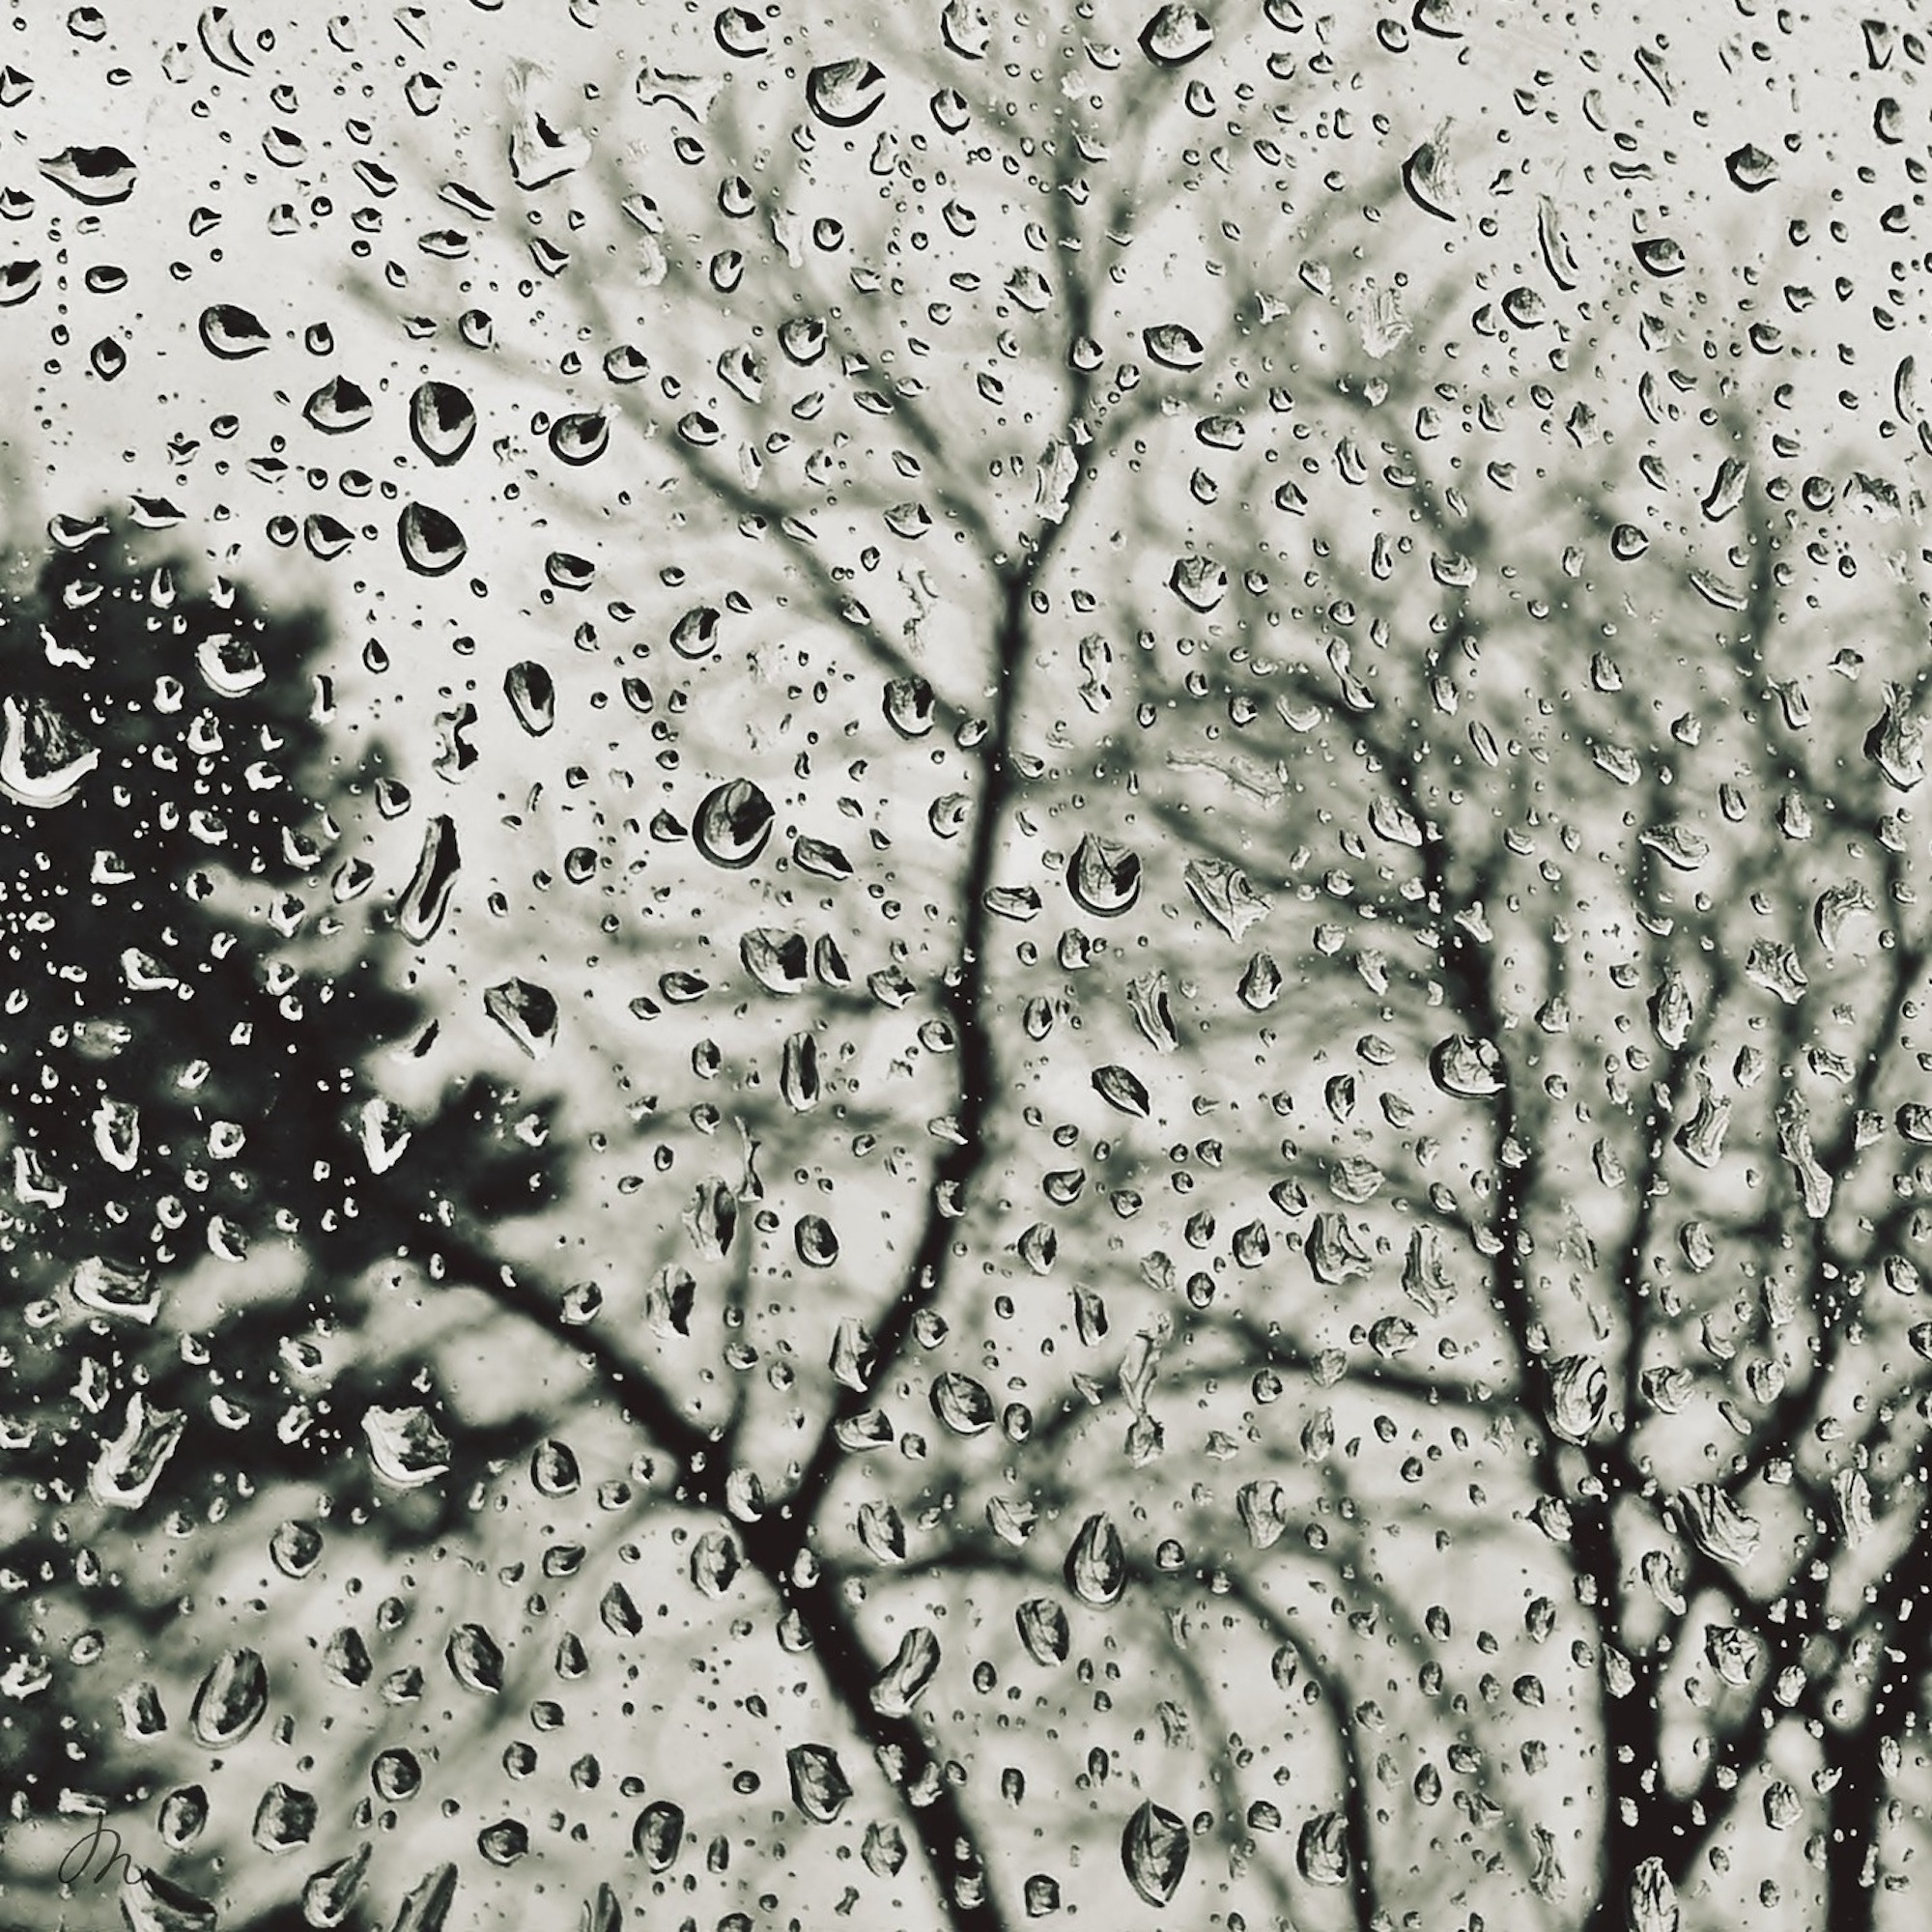 Seeing Rain Whispers